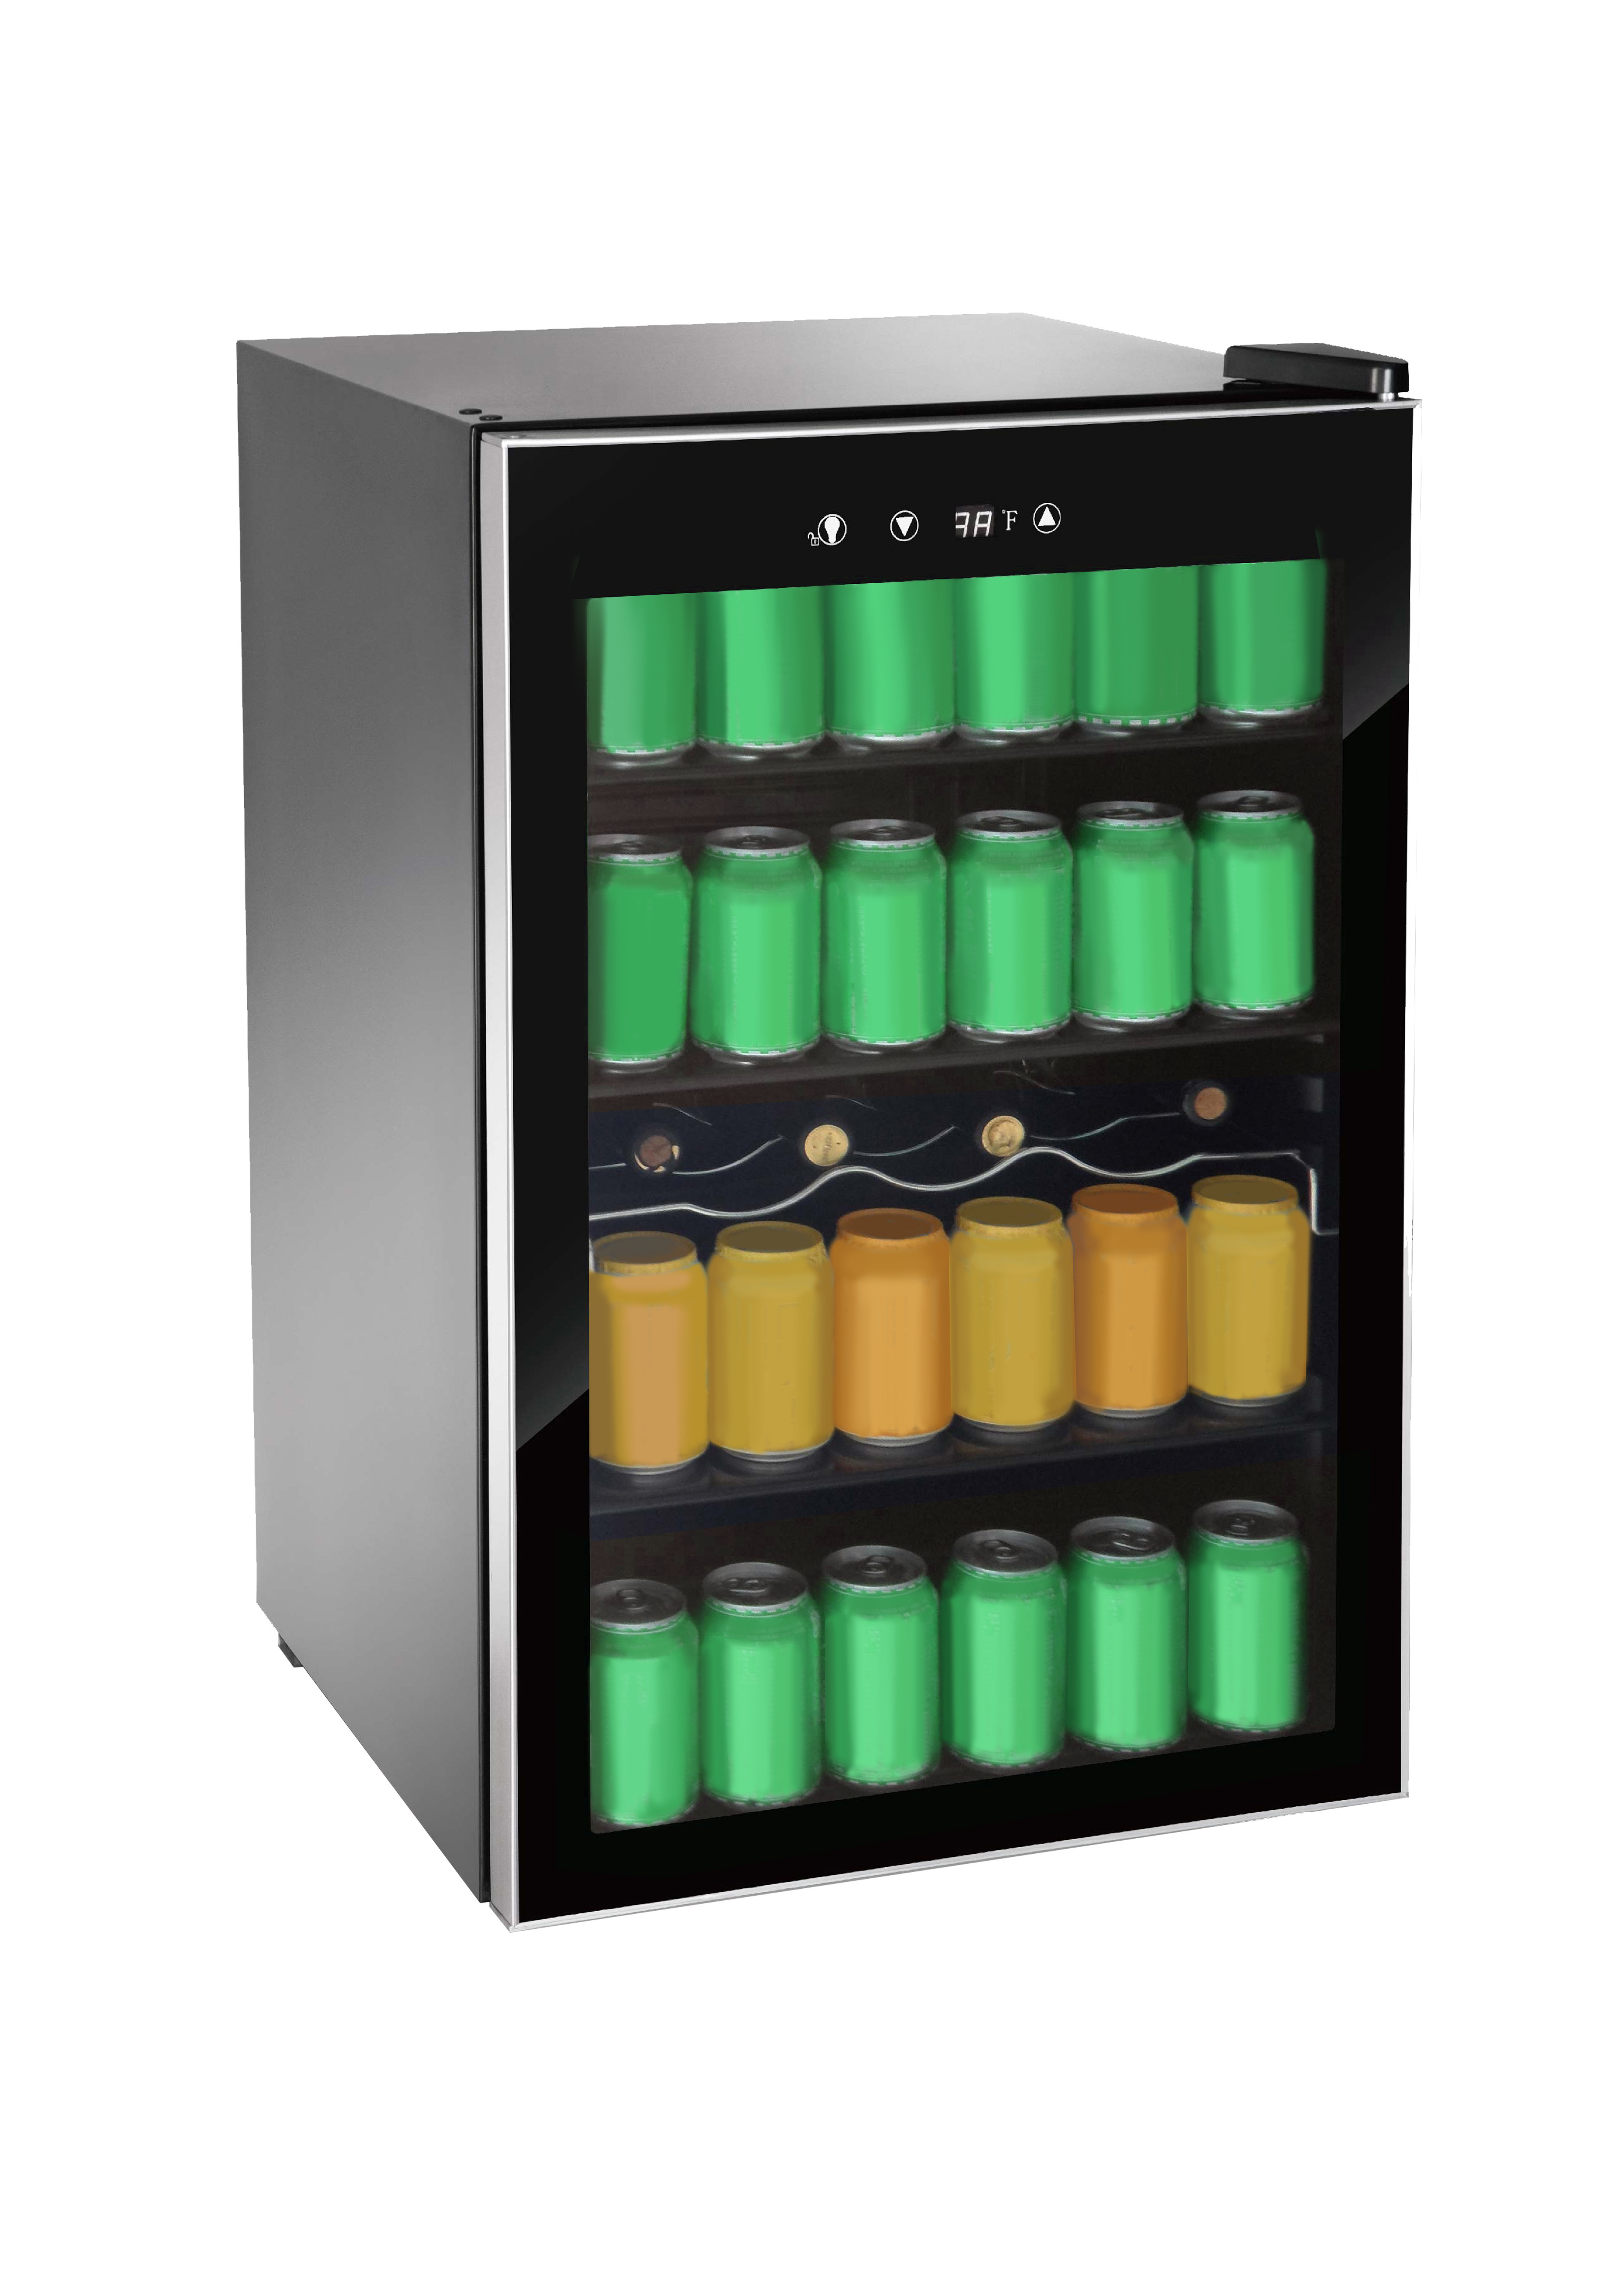 RCA 110 Can & 4 Bottle Beverage Center Refrigerator and Wine Cooler, (RMIS1530), Black - image 3 of 15